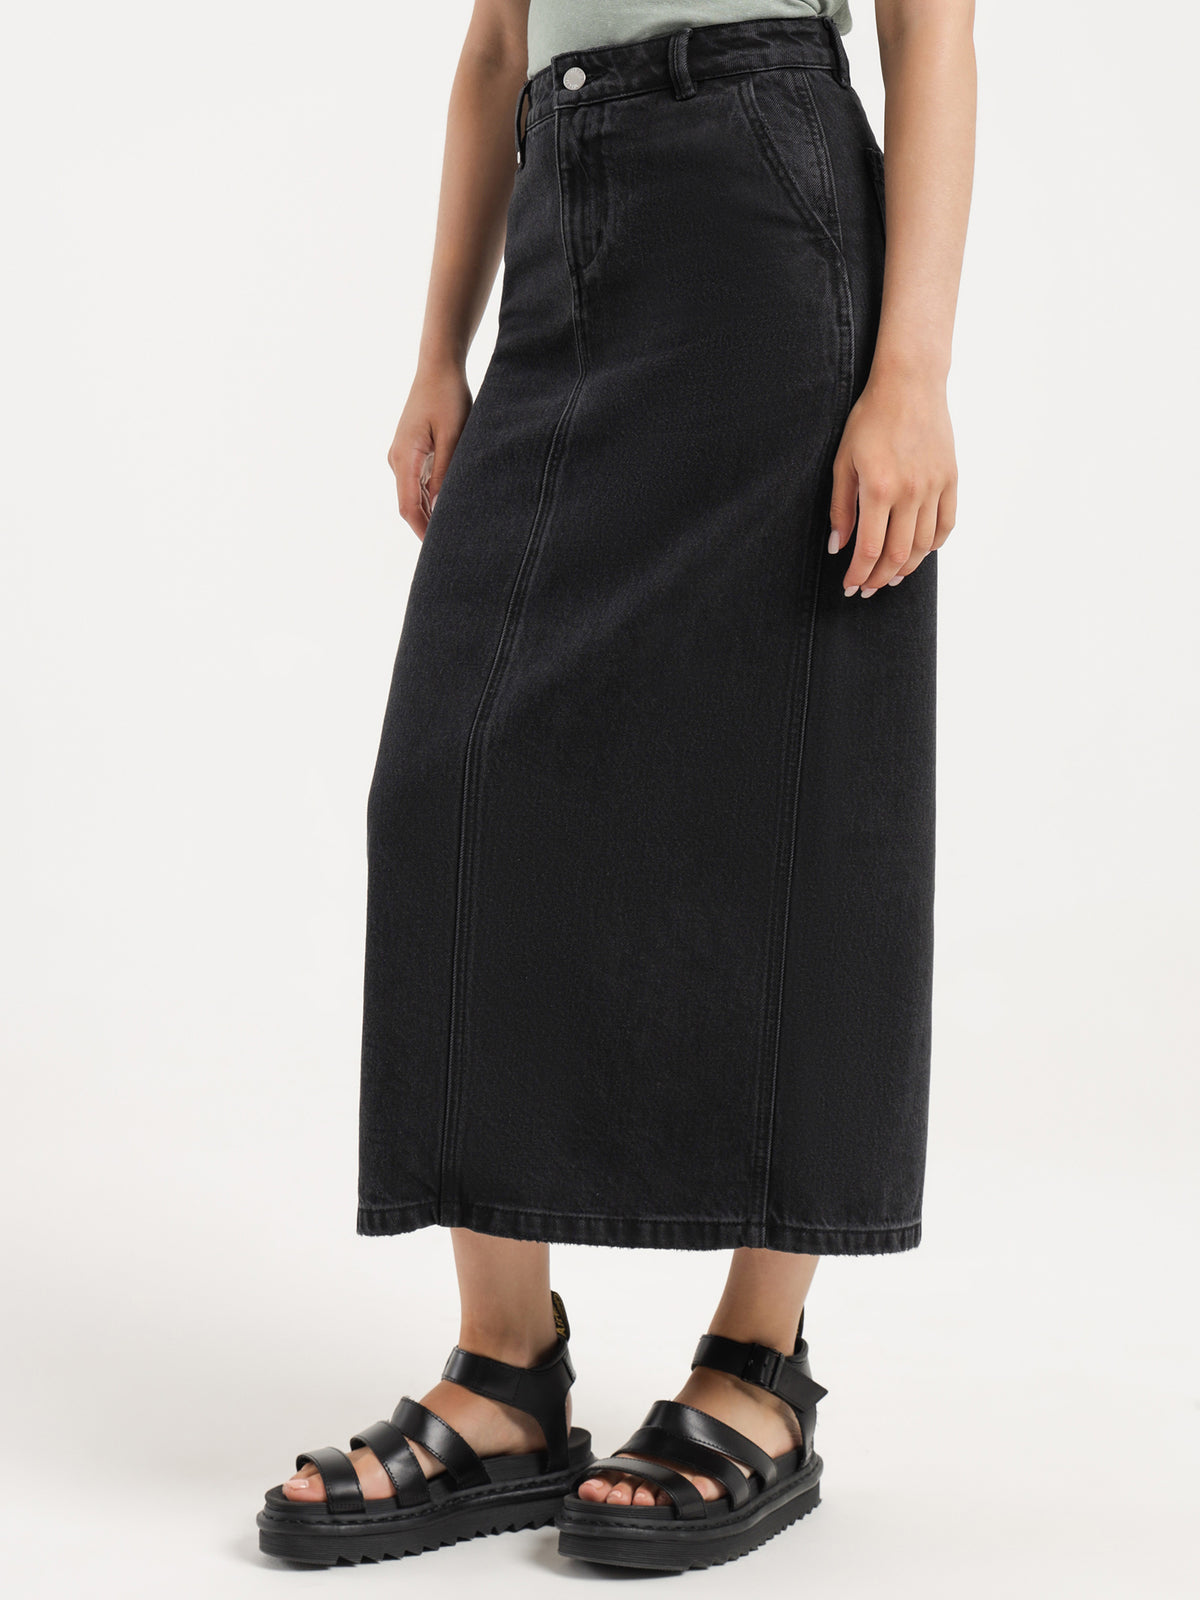 Fran Maxi Denim Skirt in Aged Black